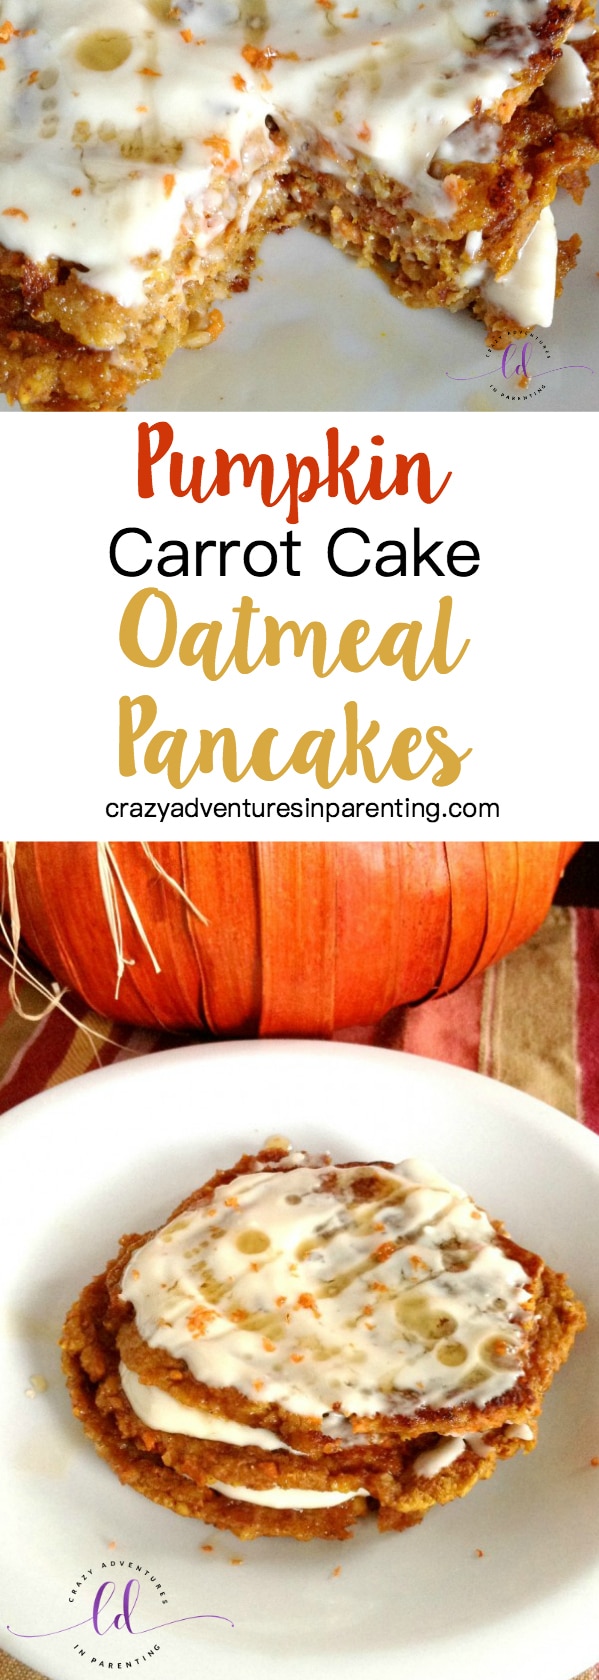 Pumpkin Carrot Cake Oatmeal Pancakes